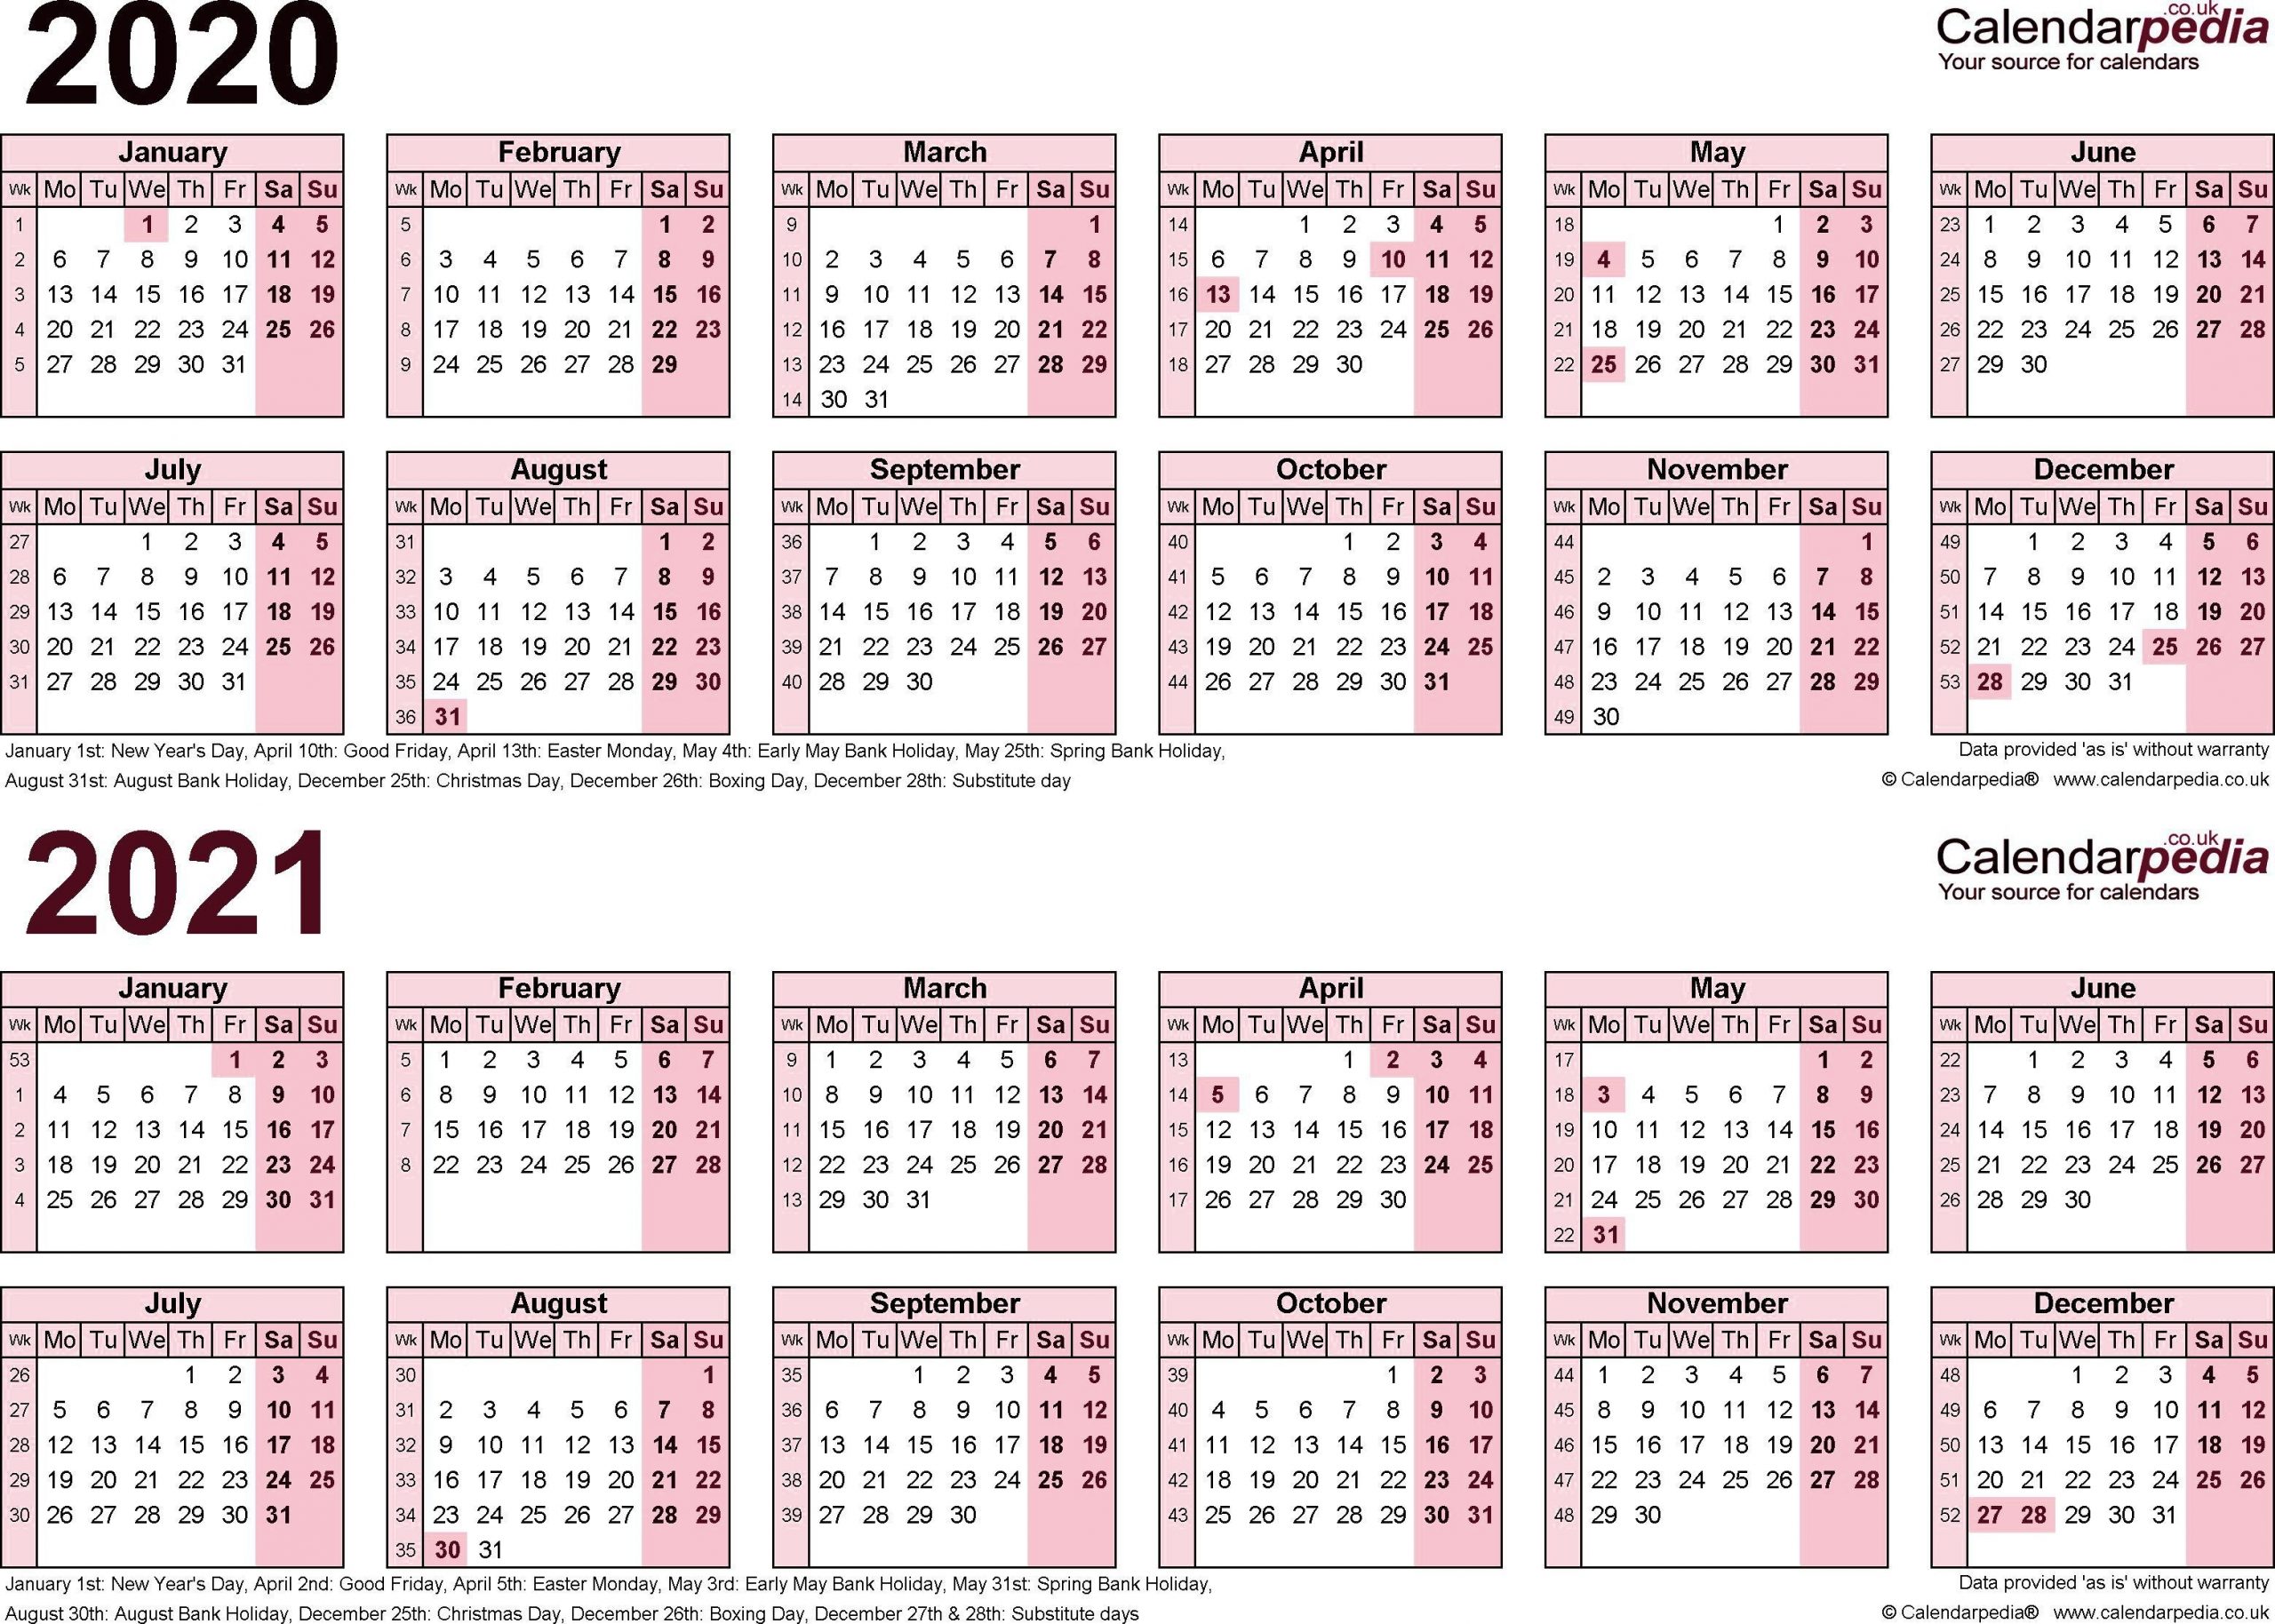 2020 Biweekly Payroll Calendar Template ~ Addictionary-2021 Bi-Weekly Payroll Calendar